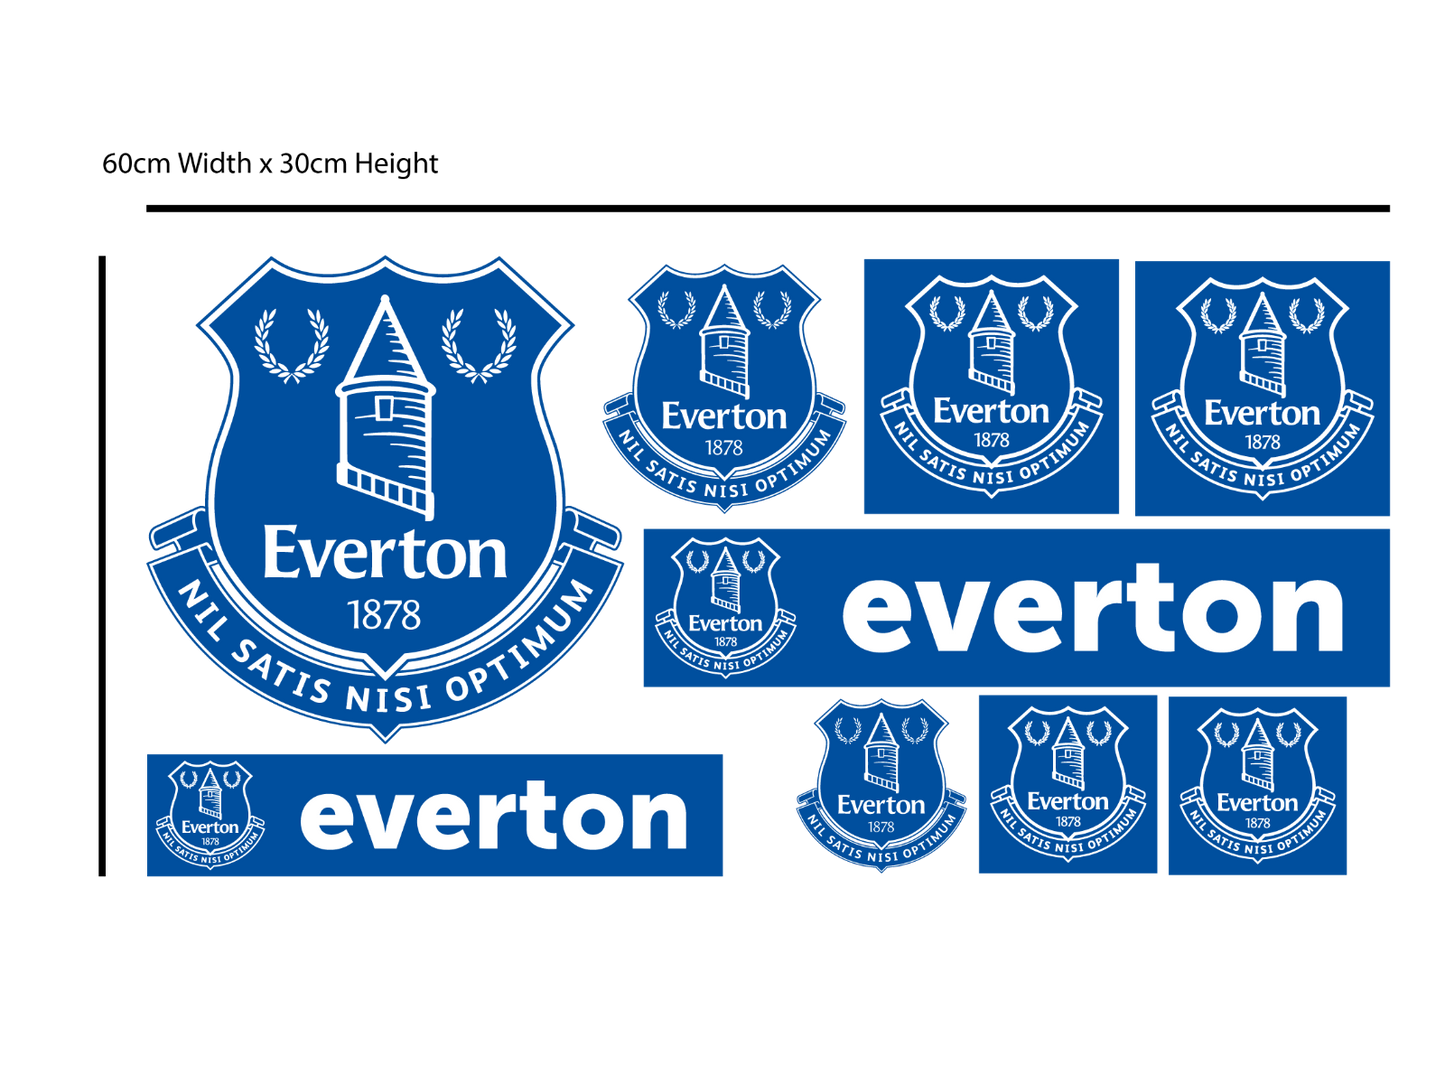 Everton Football Club - Goodison Park Stadium (Corner Flag) + Toffees Wall Sticker Set